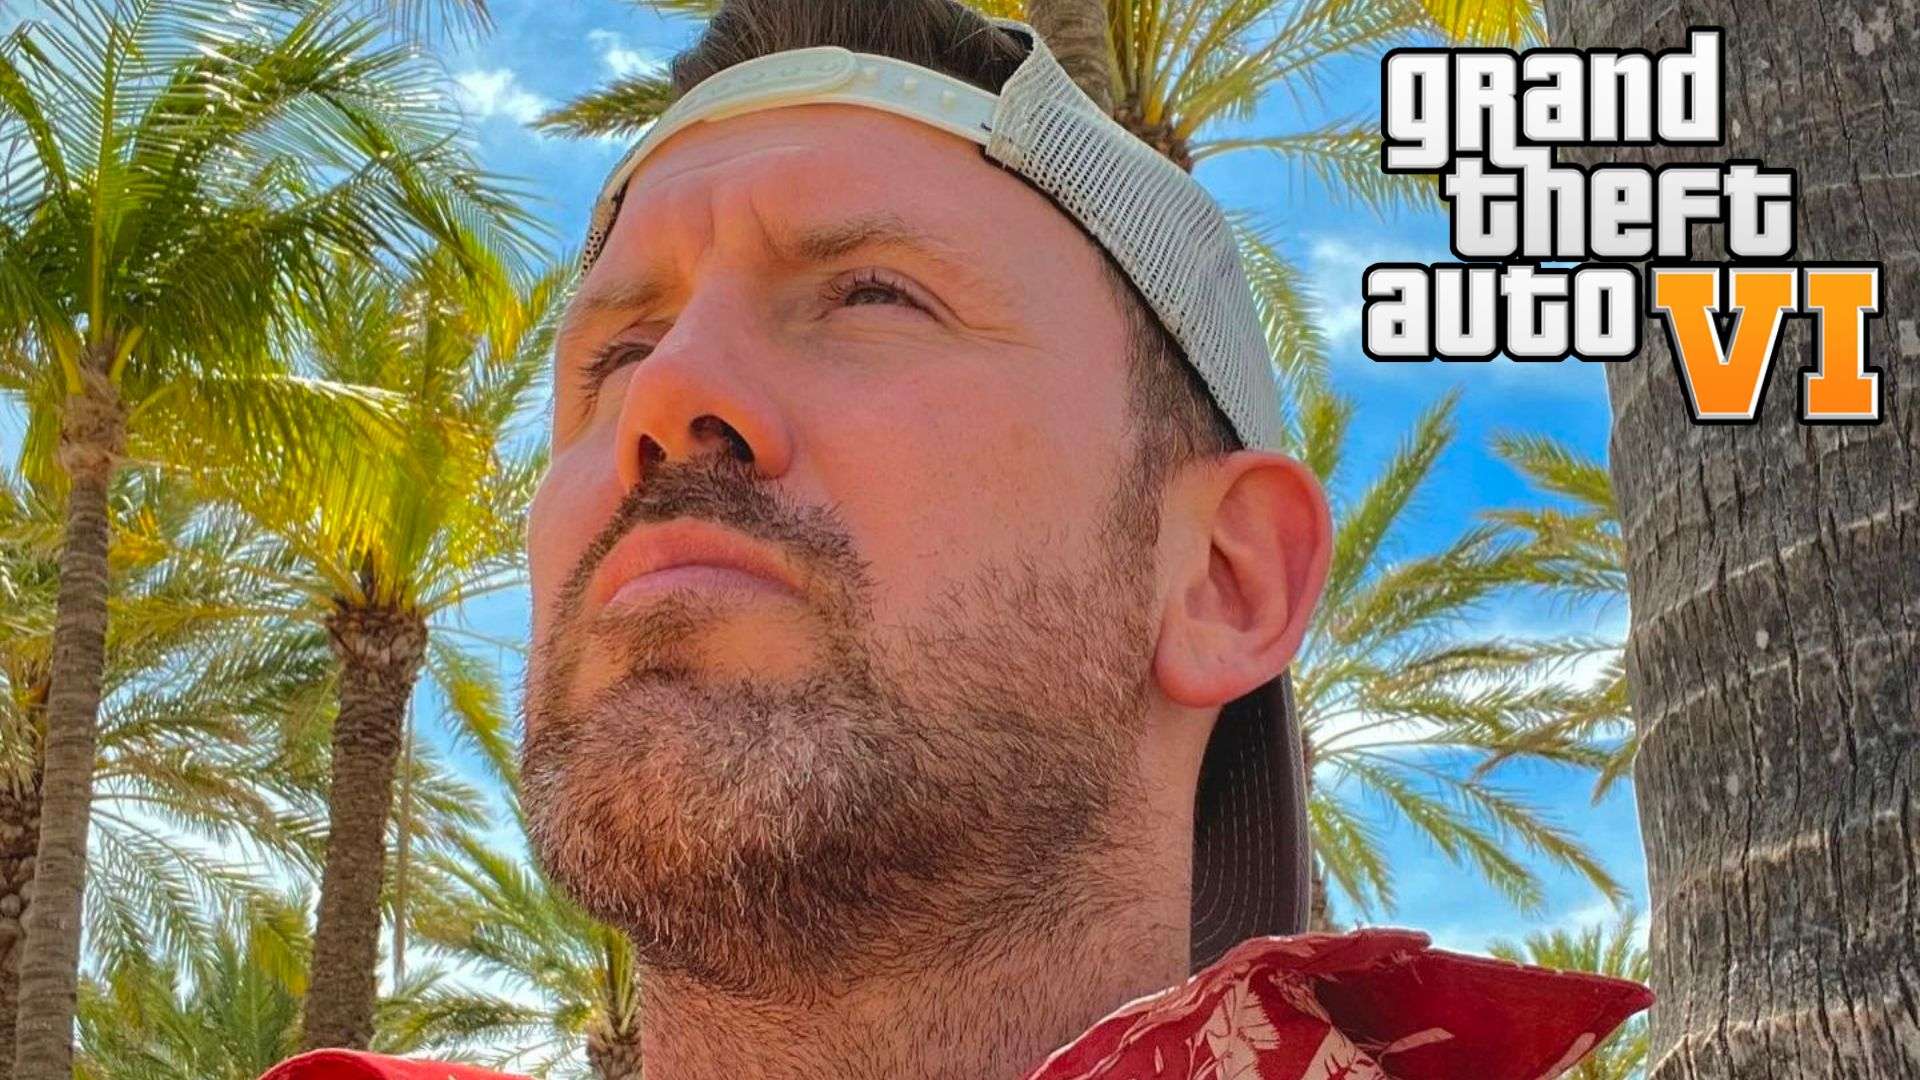 Actor Bryan Zampella sat on beach in red shirt next to GTA 6 logo